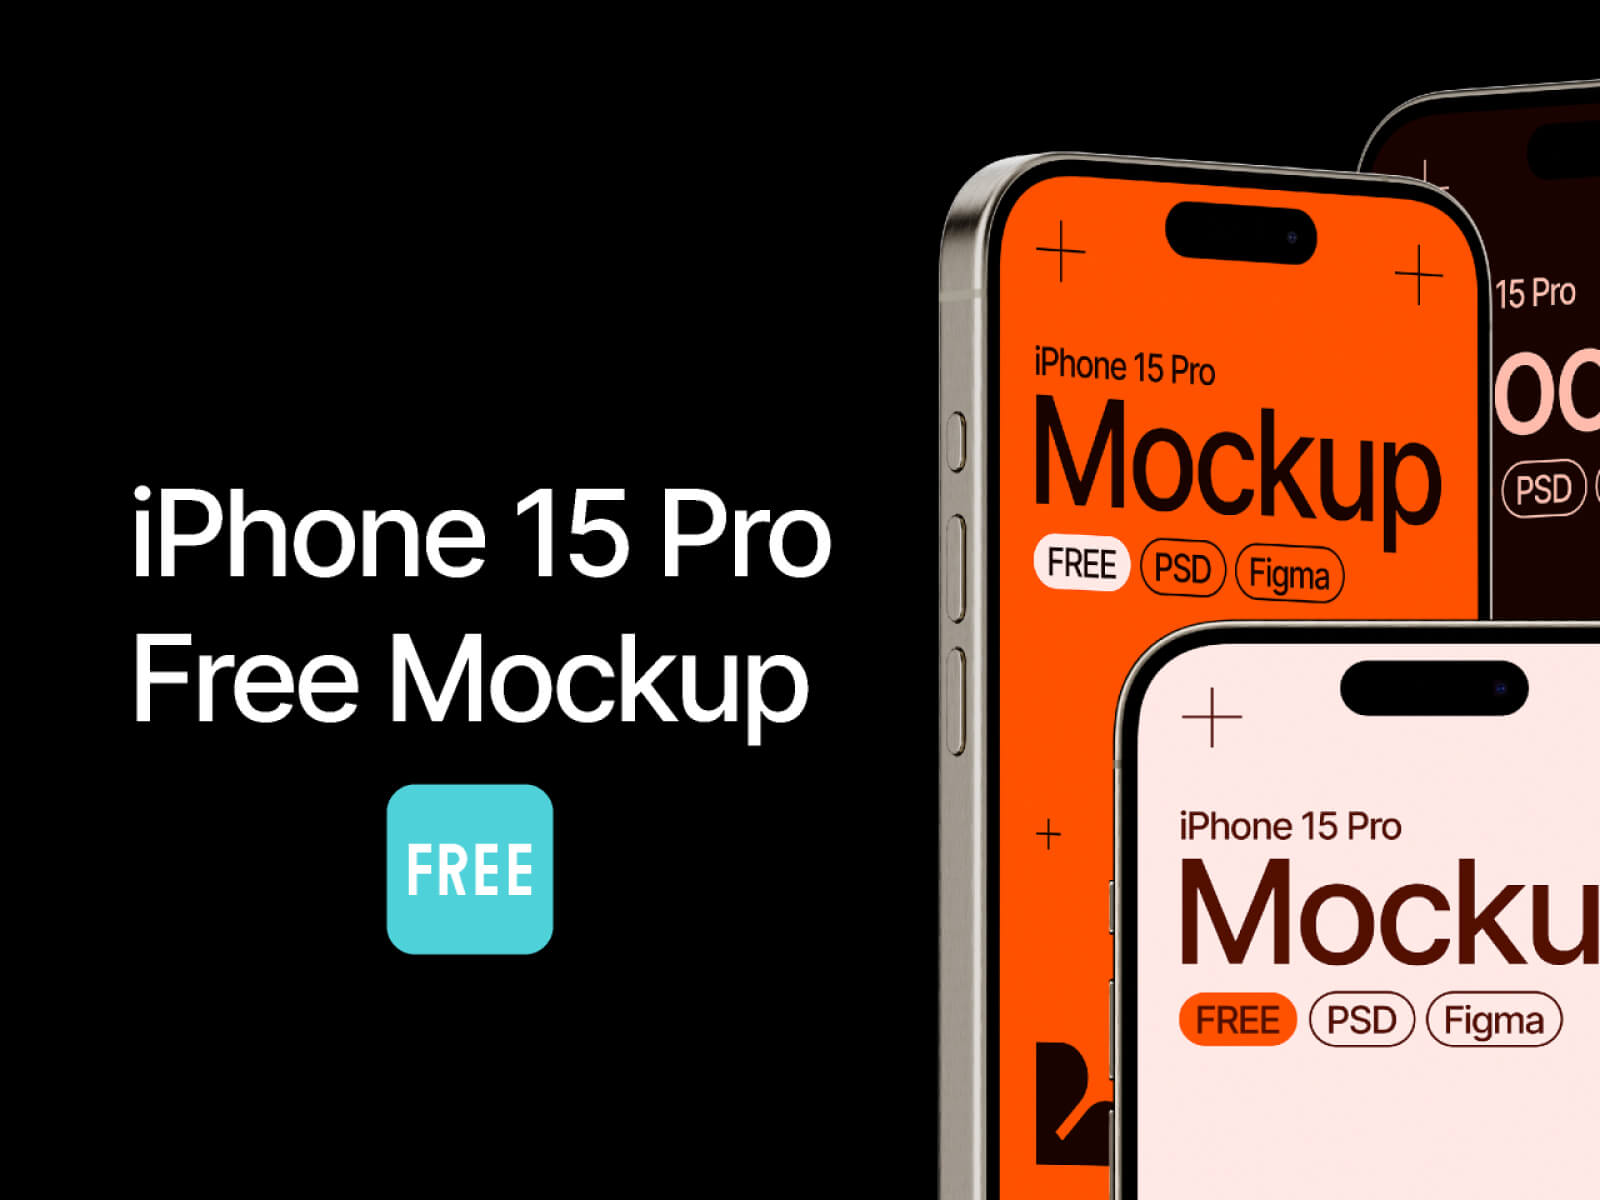 A free iphone 15 pro mockup